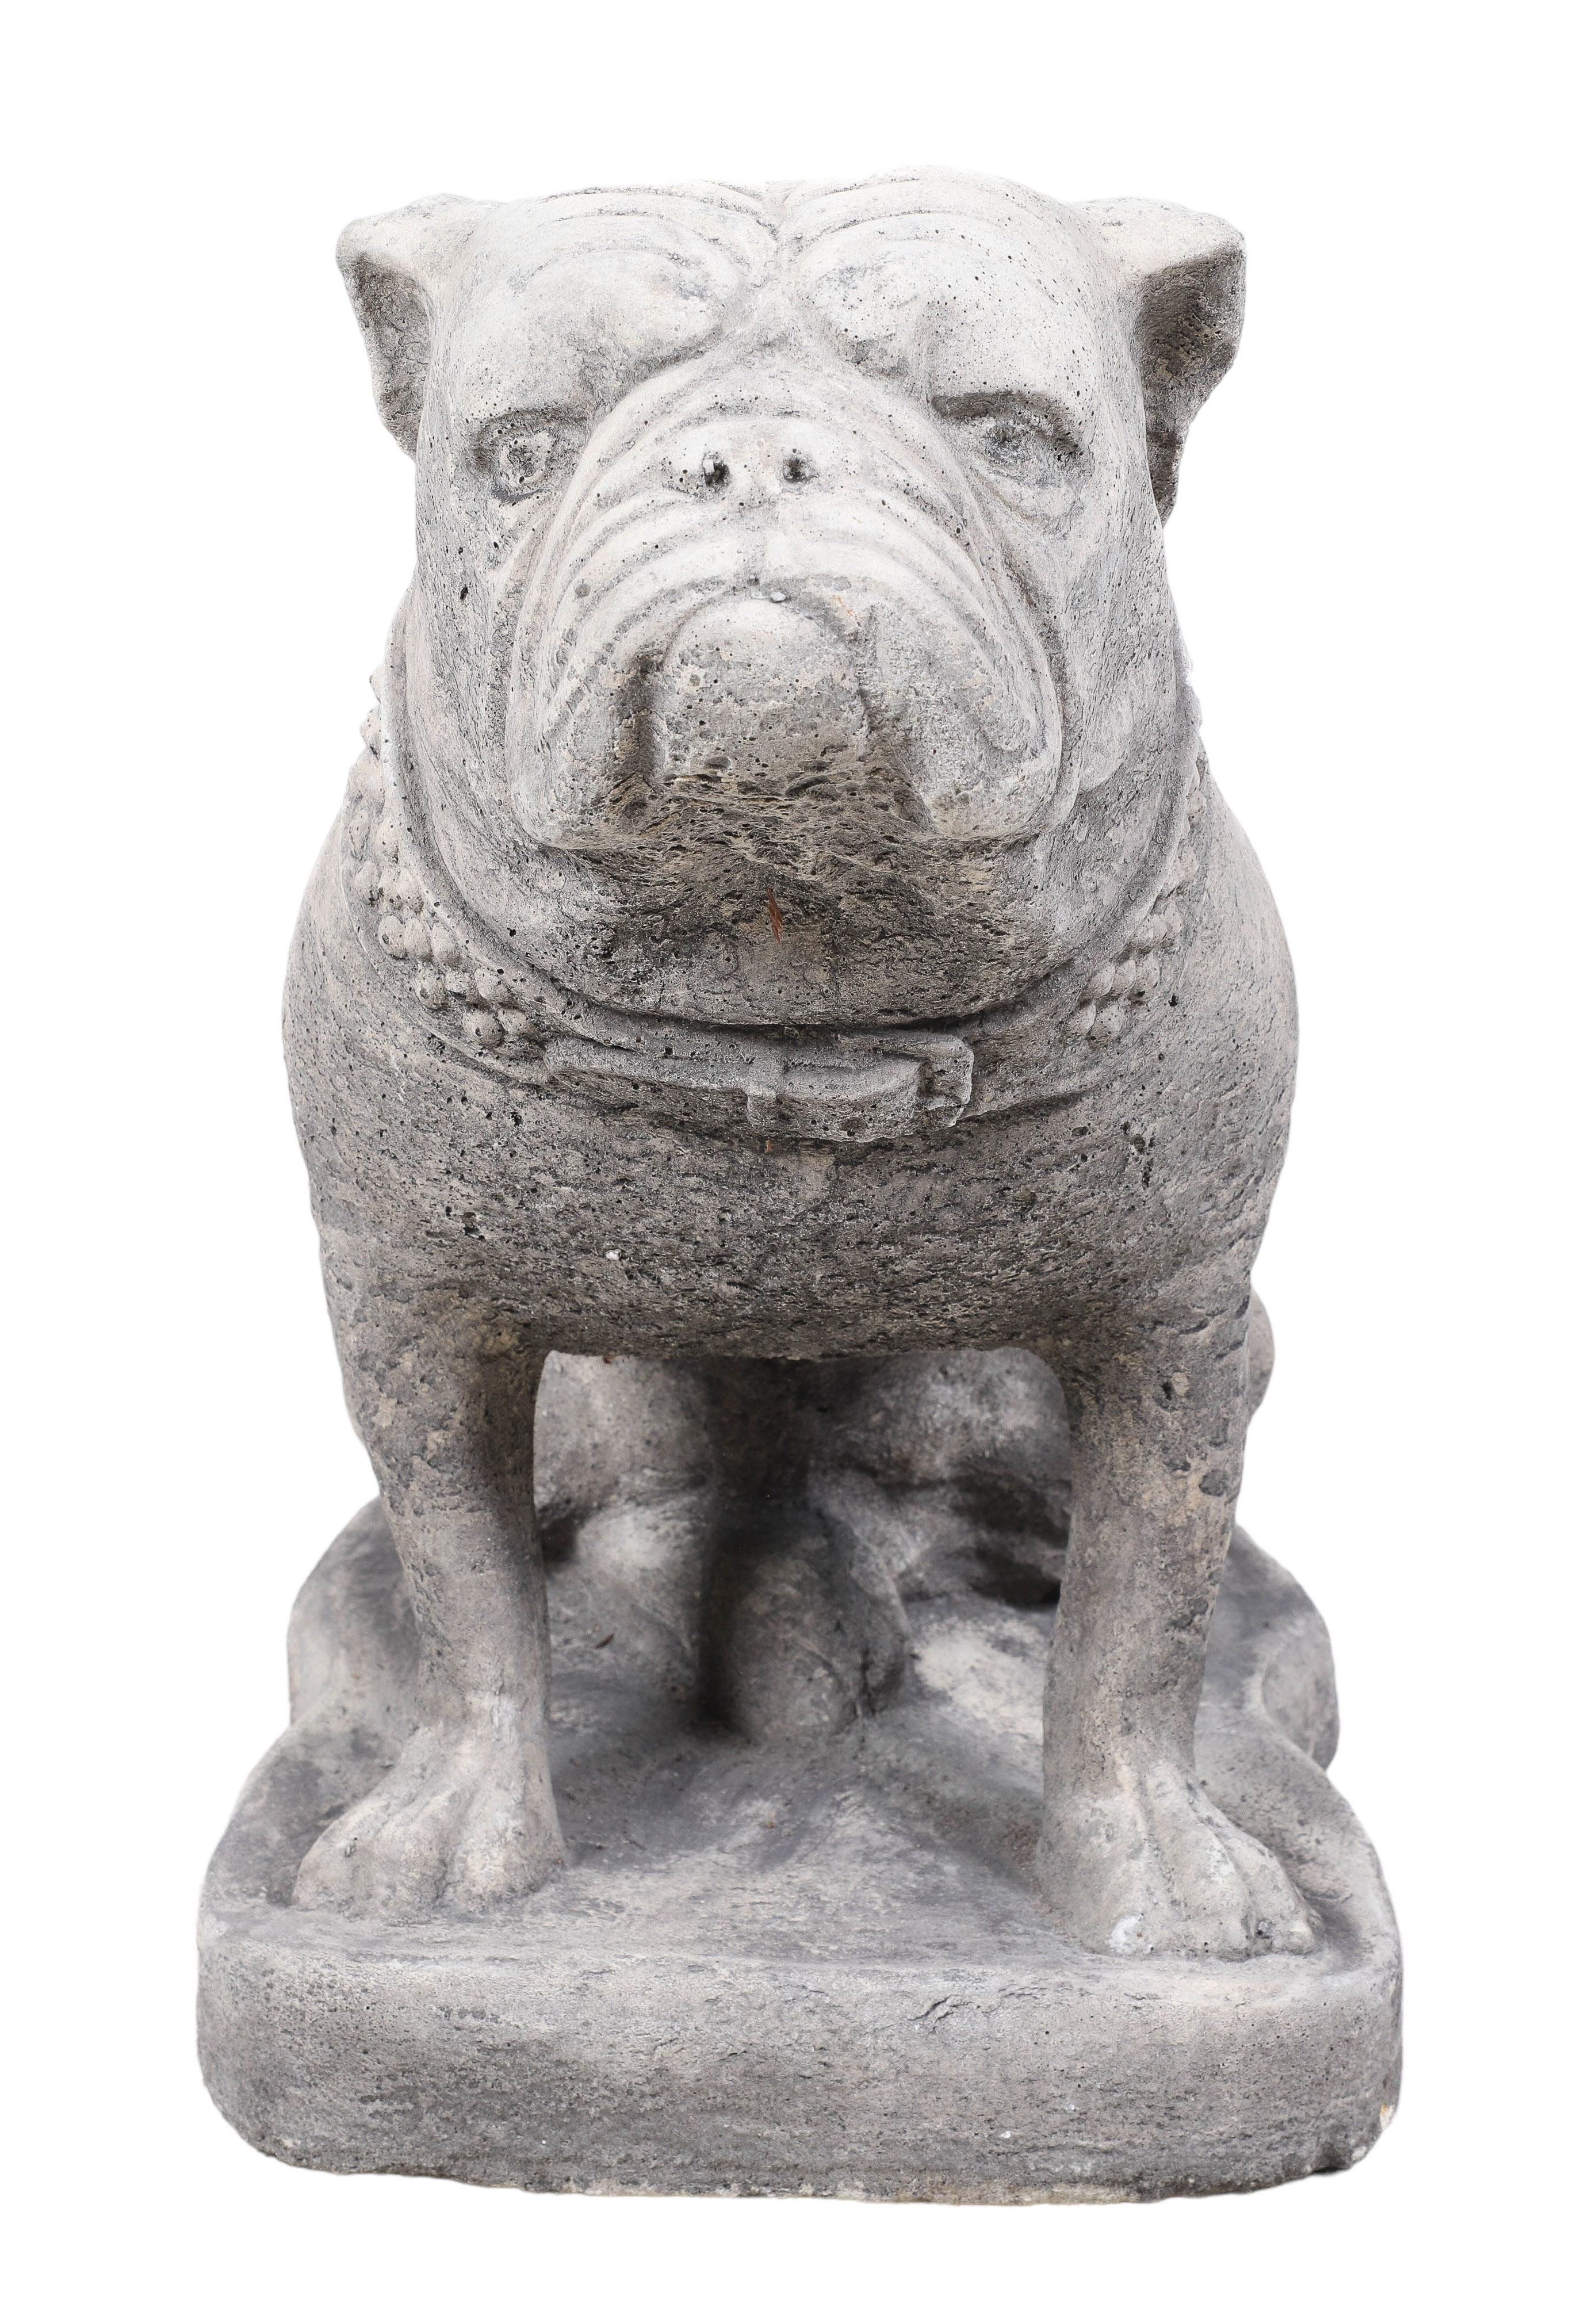 Cement garden statue of a bulldog,